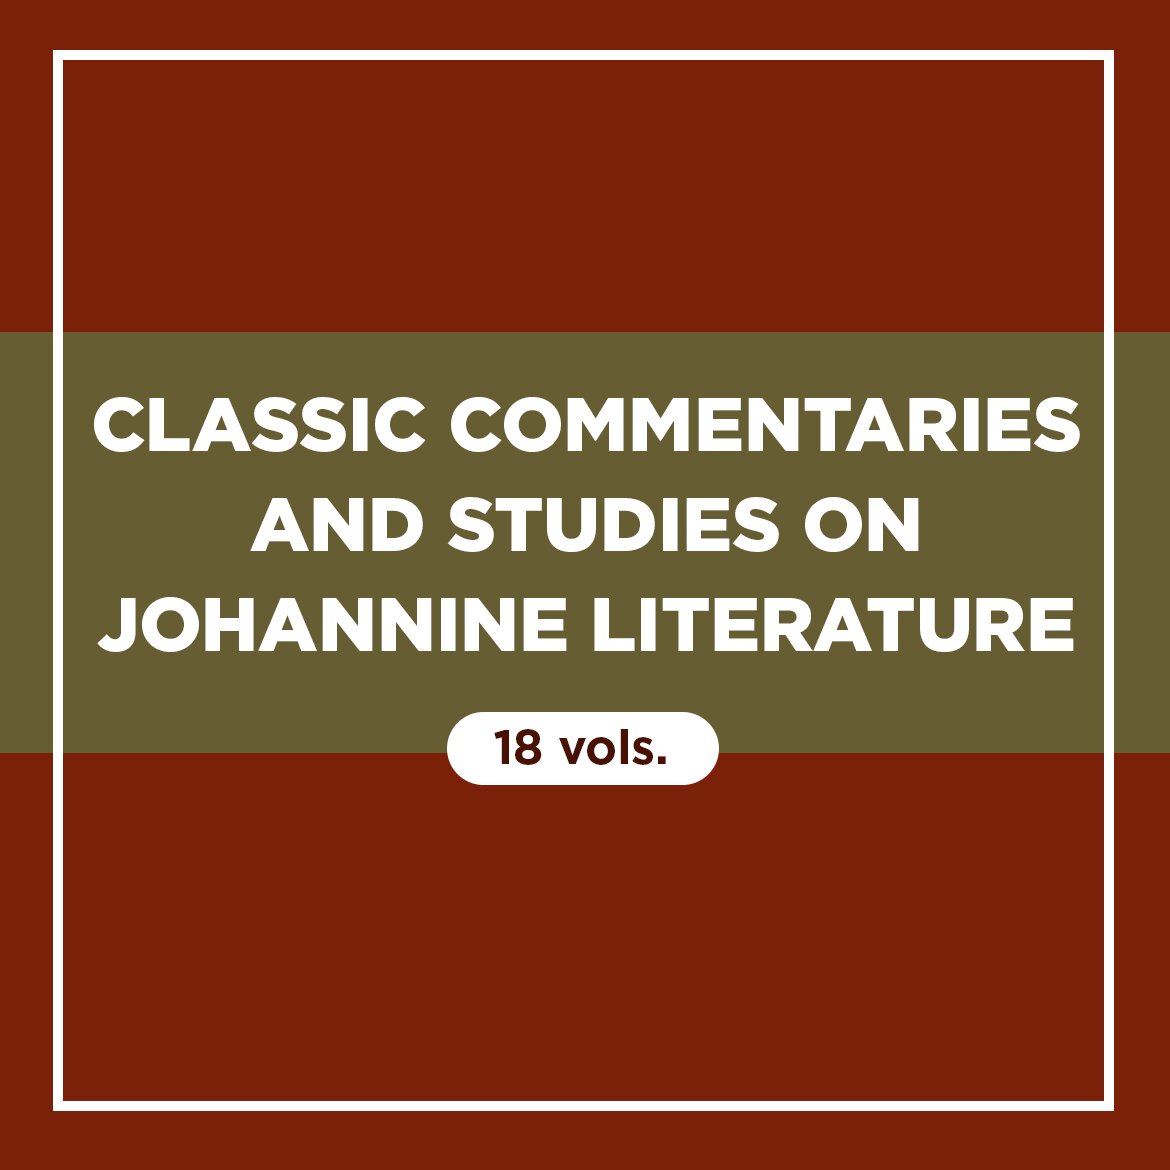 Classic Commentaries and Studies on Johannine Literature (18 vols.)